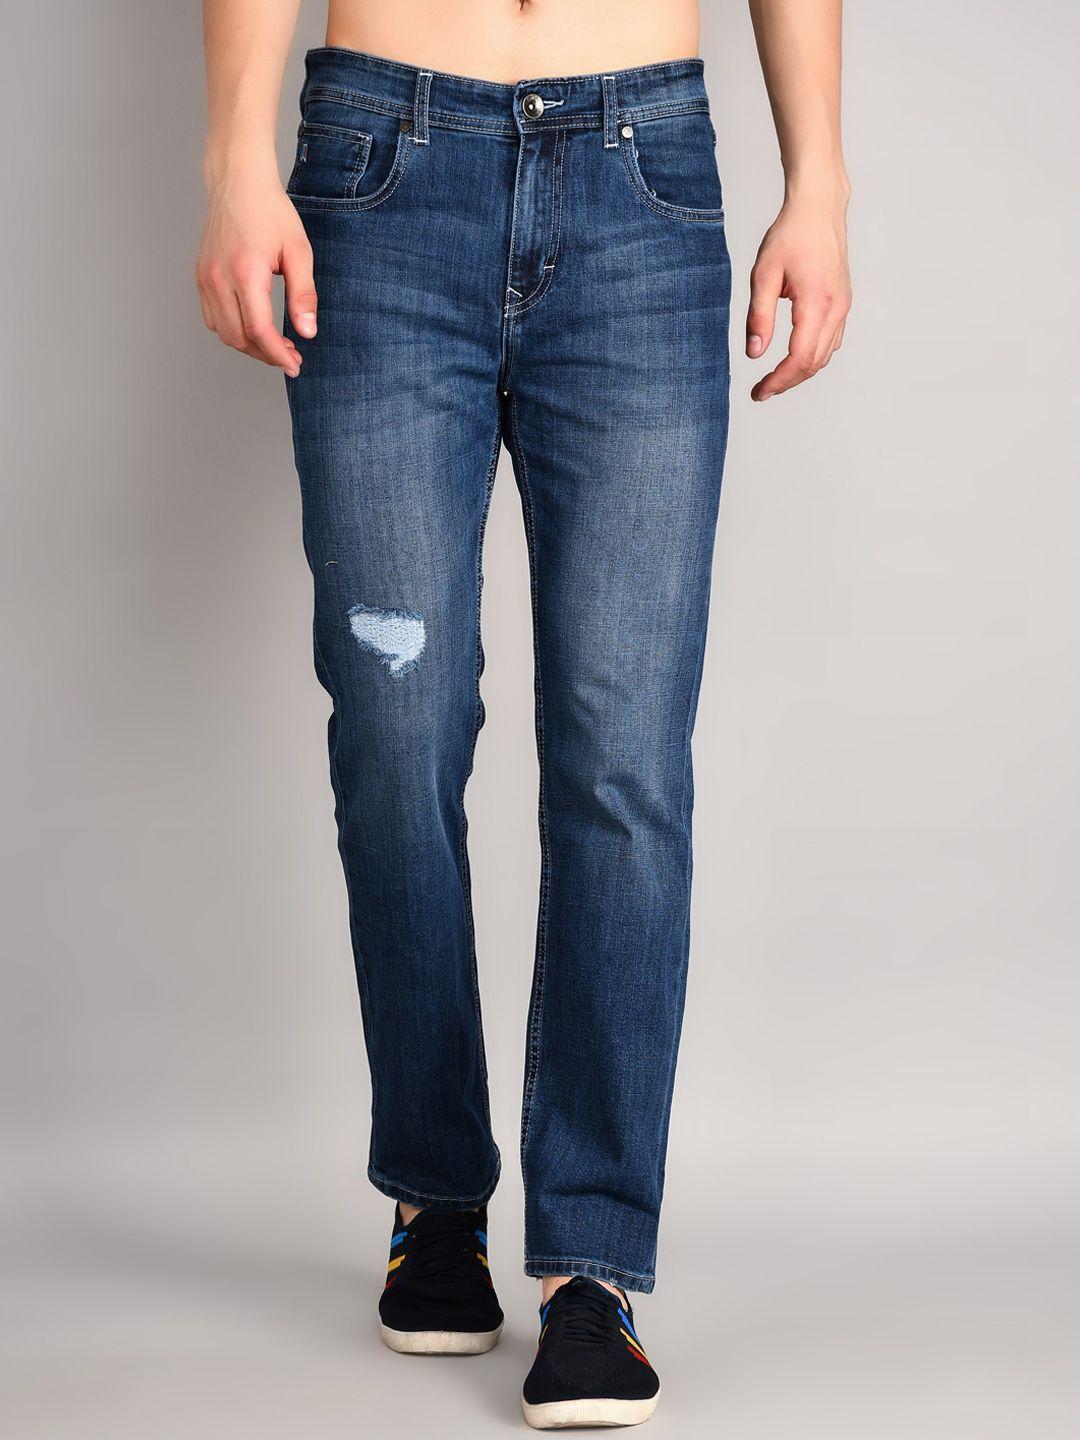 tim paris comfort low distress light fade mid-rise regular fit stretchable jeans